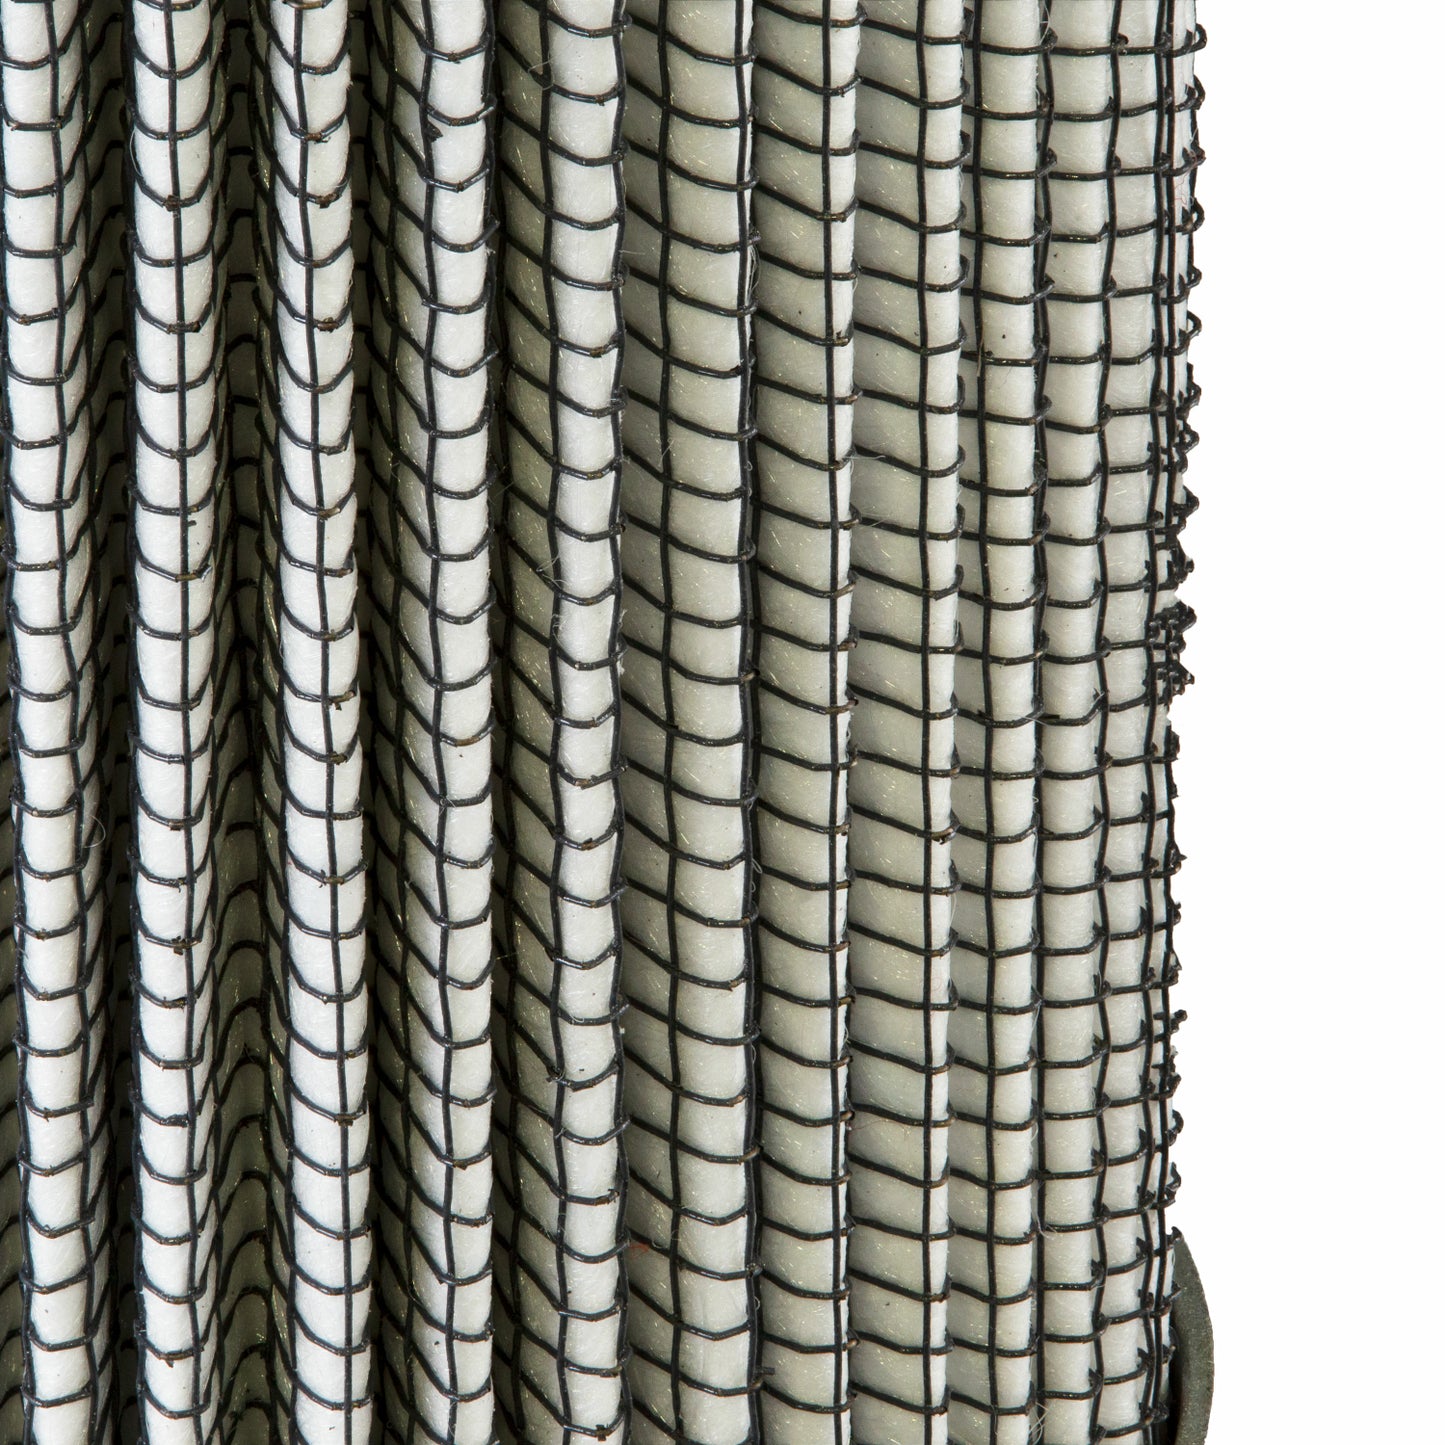 Cartridge Filter Element SF9020-8-1UM 1 Micron Microglass